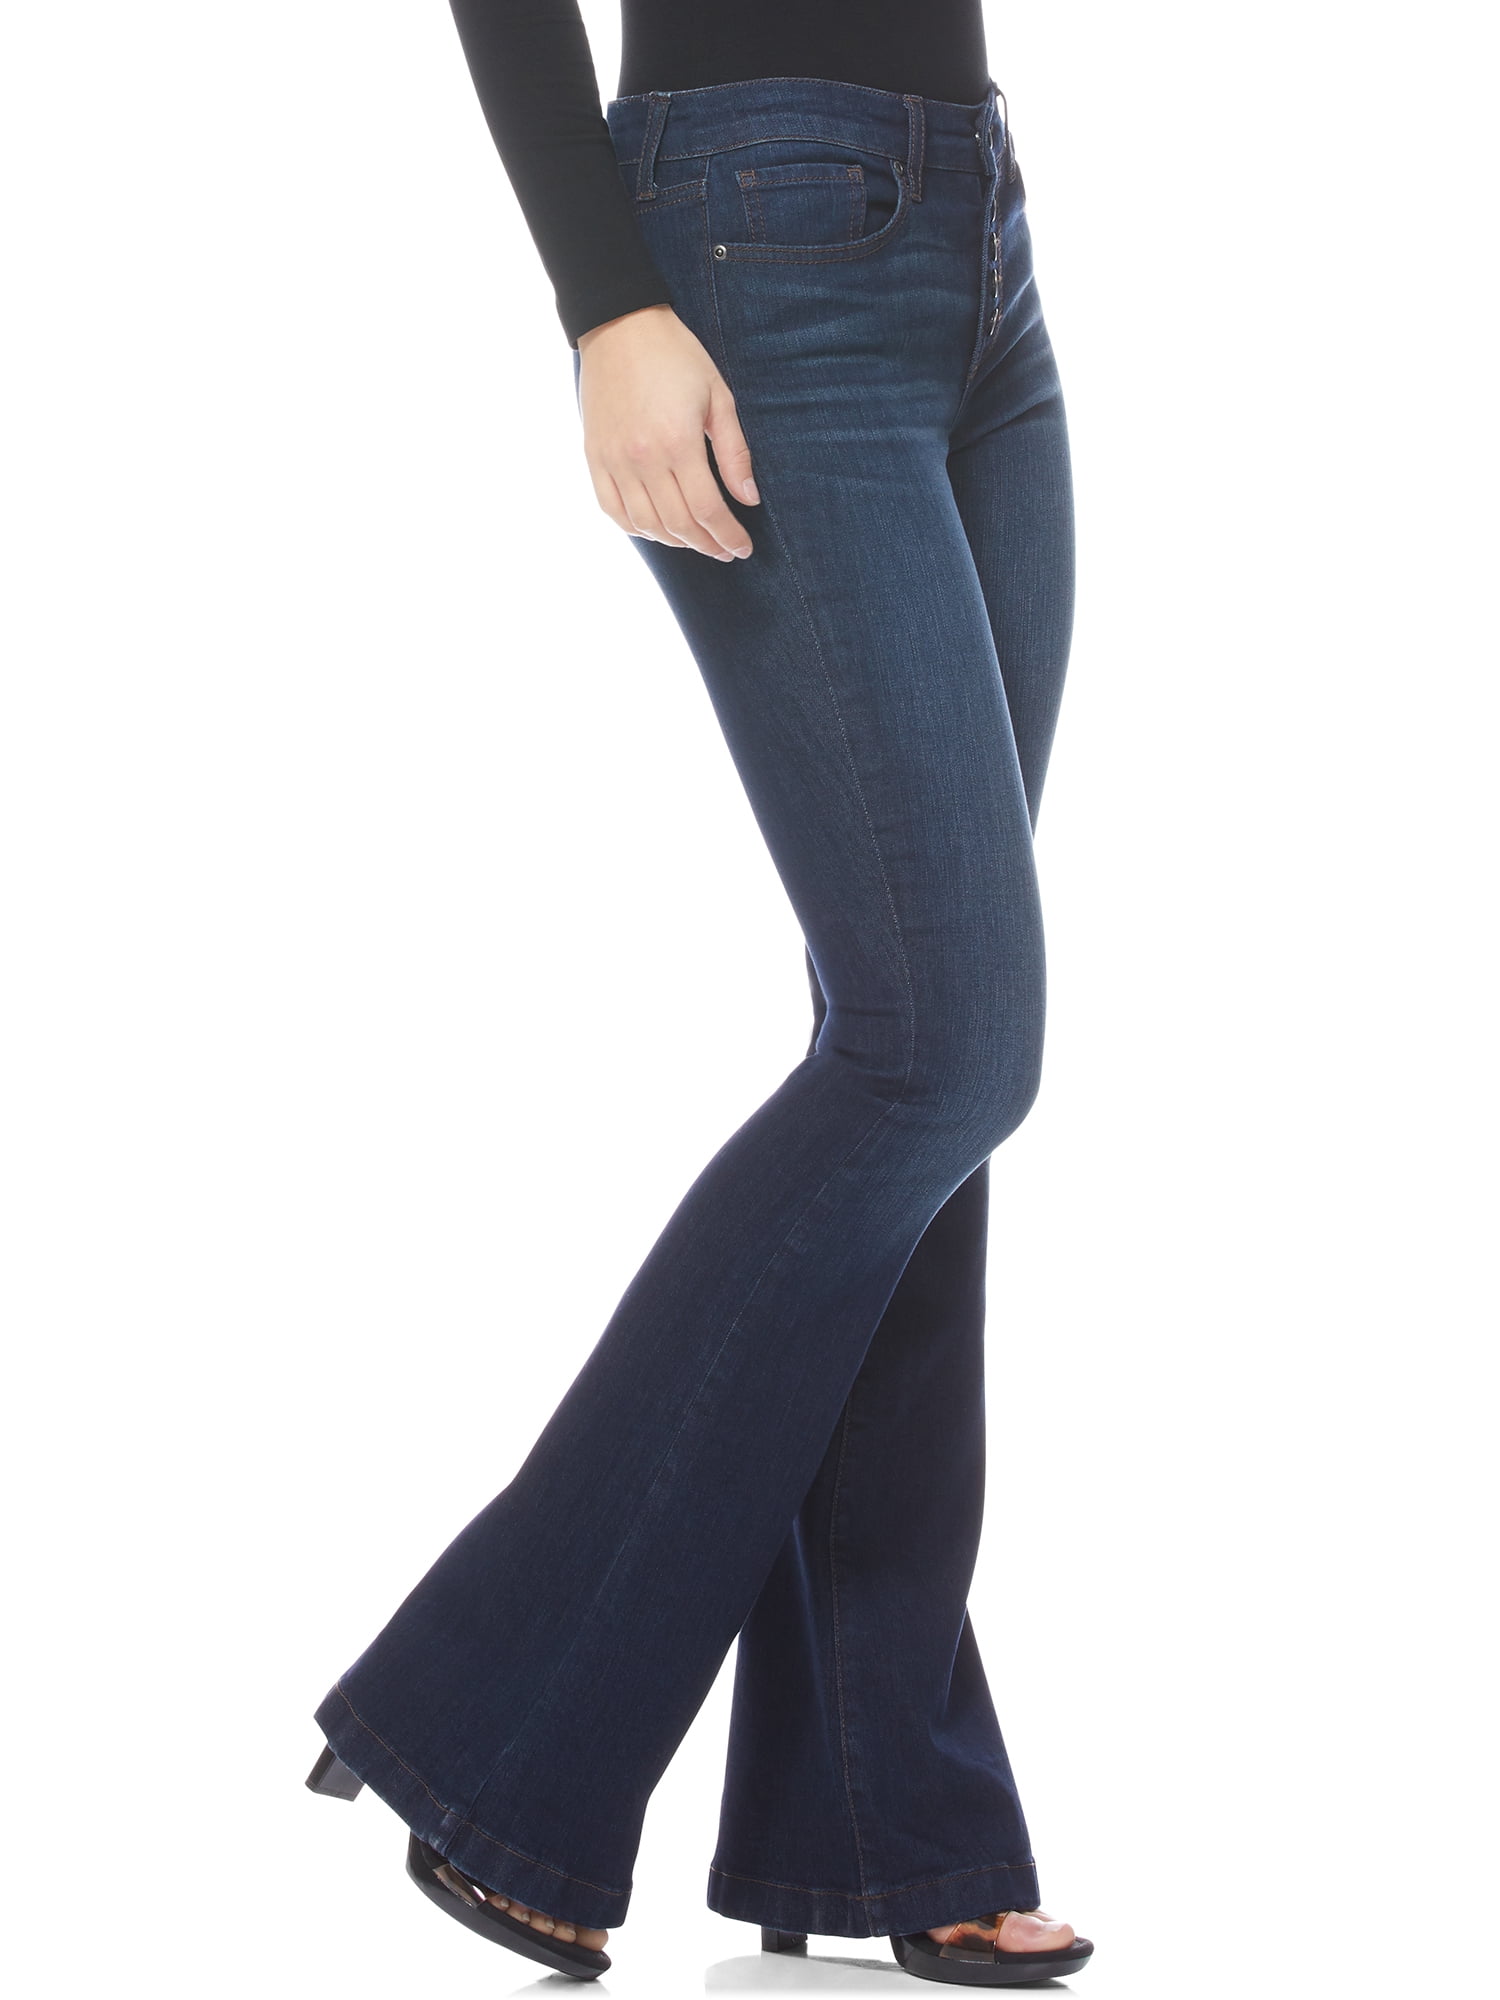 Sofia Jeans by Sofia Vergara Melisa High Rise Flare, Size 16 Short, Denim  Blue - Helia Beer Co